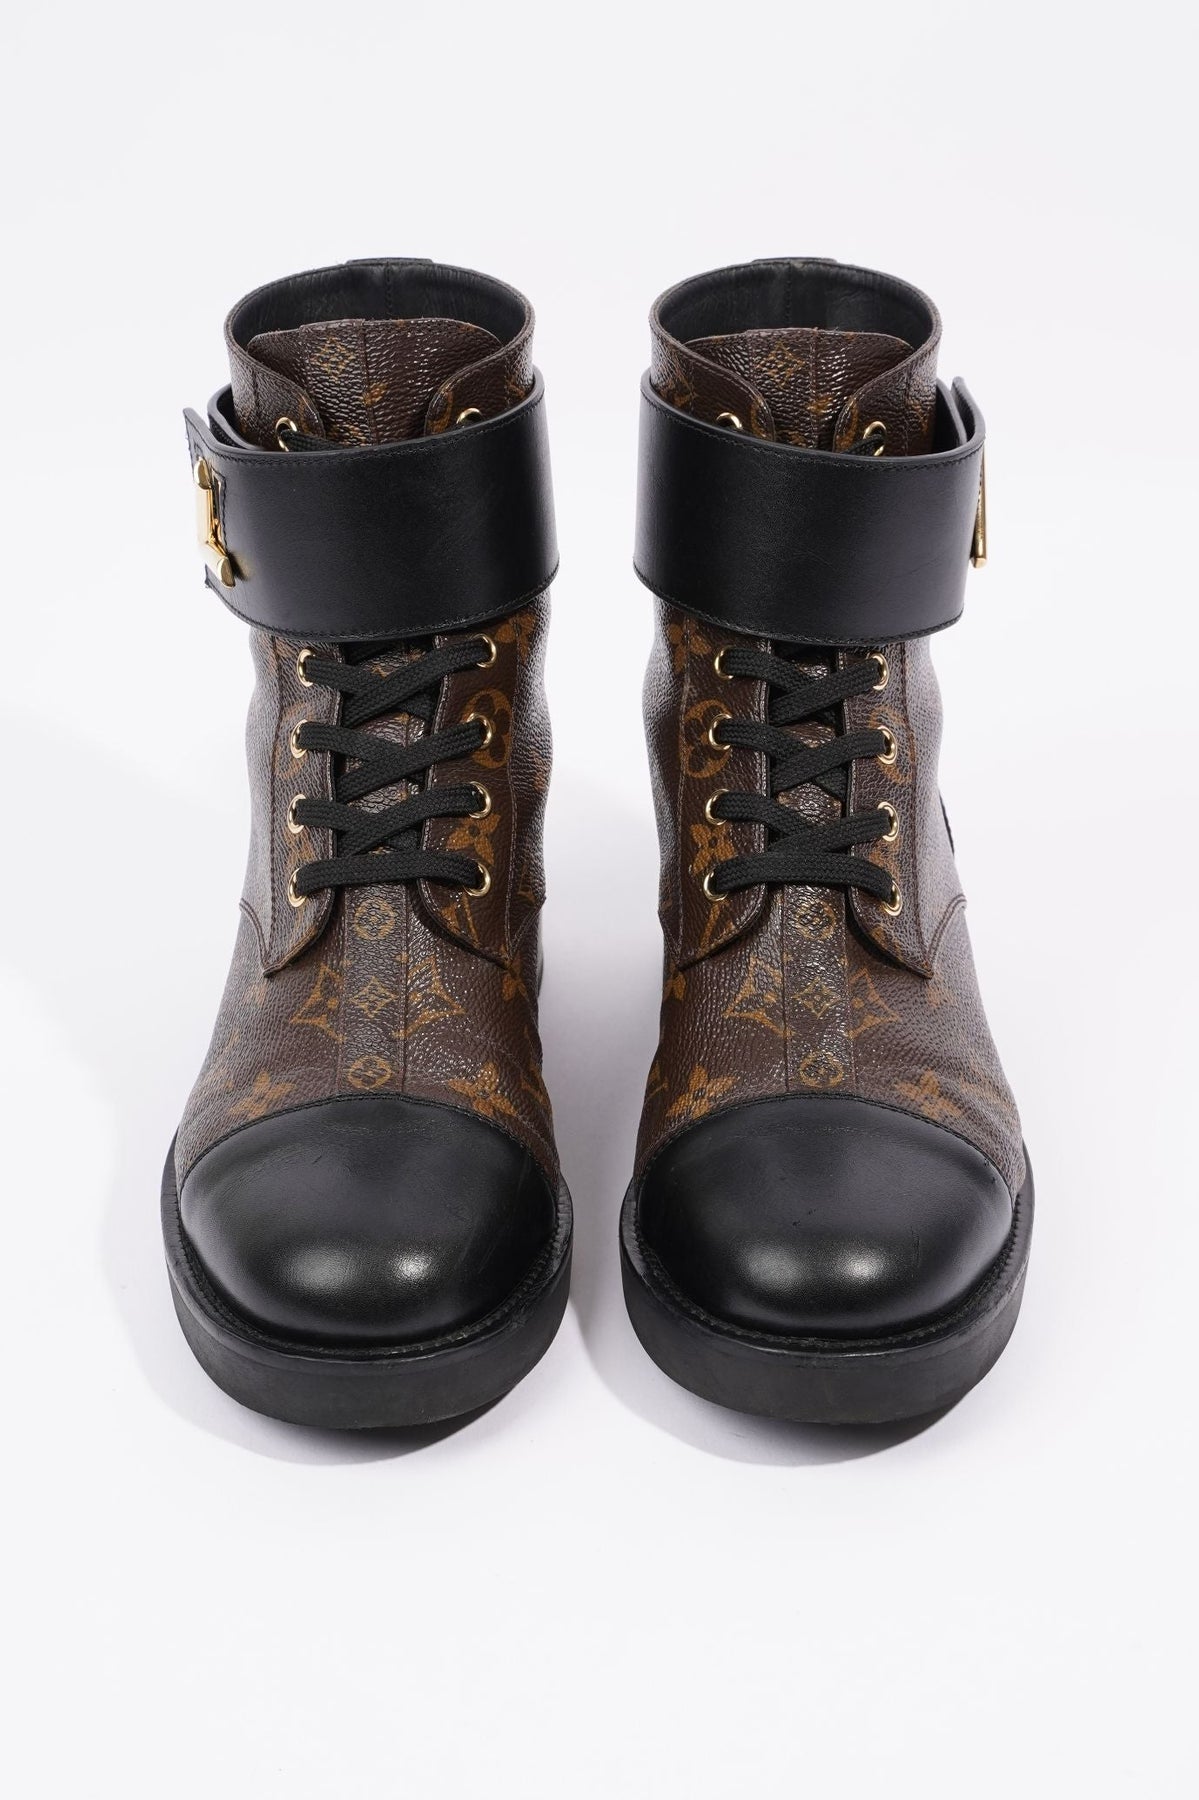 wonderland ranger boots